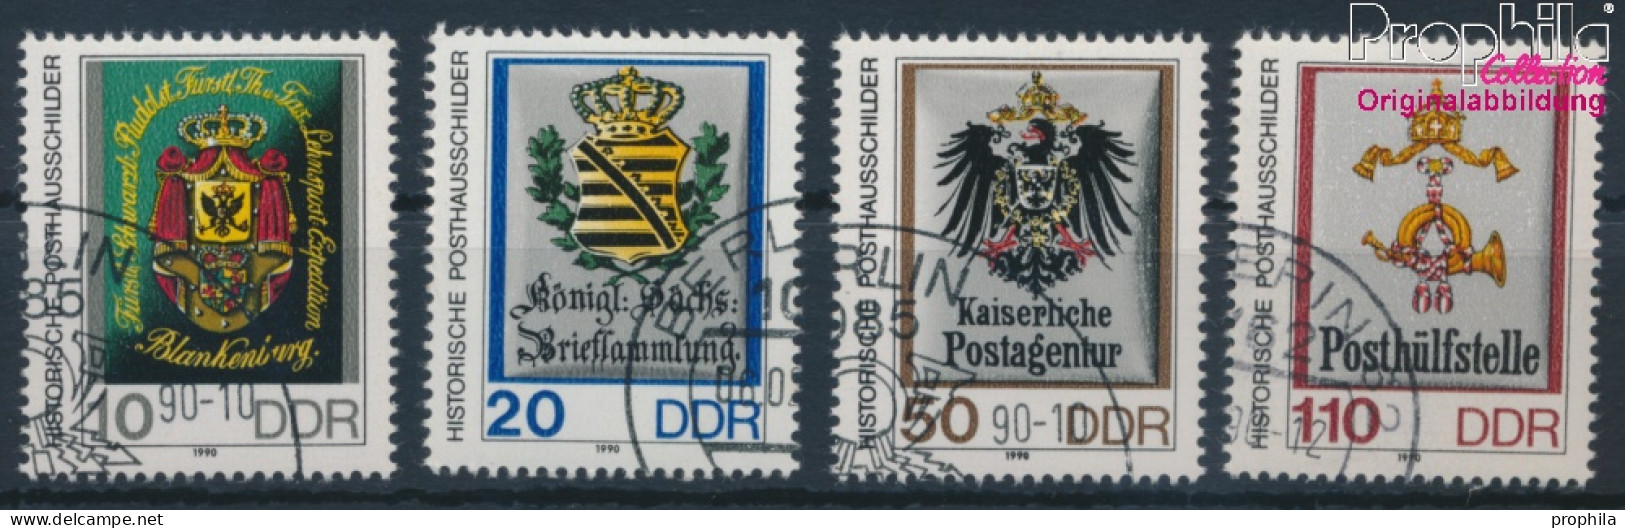 DDR 3302-3305 (kompl.Ausgabe) Gestempelt 1990 Posthausschilder Kleinformat (10405745 - Gebraucht